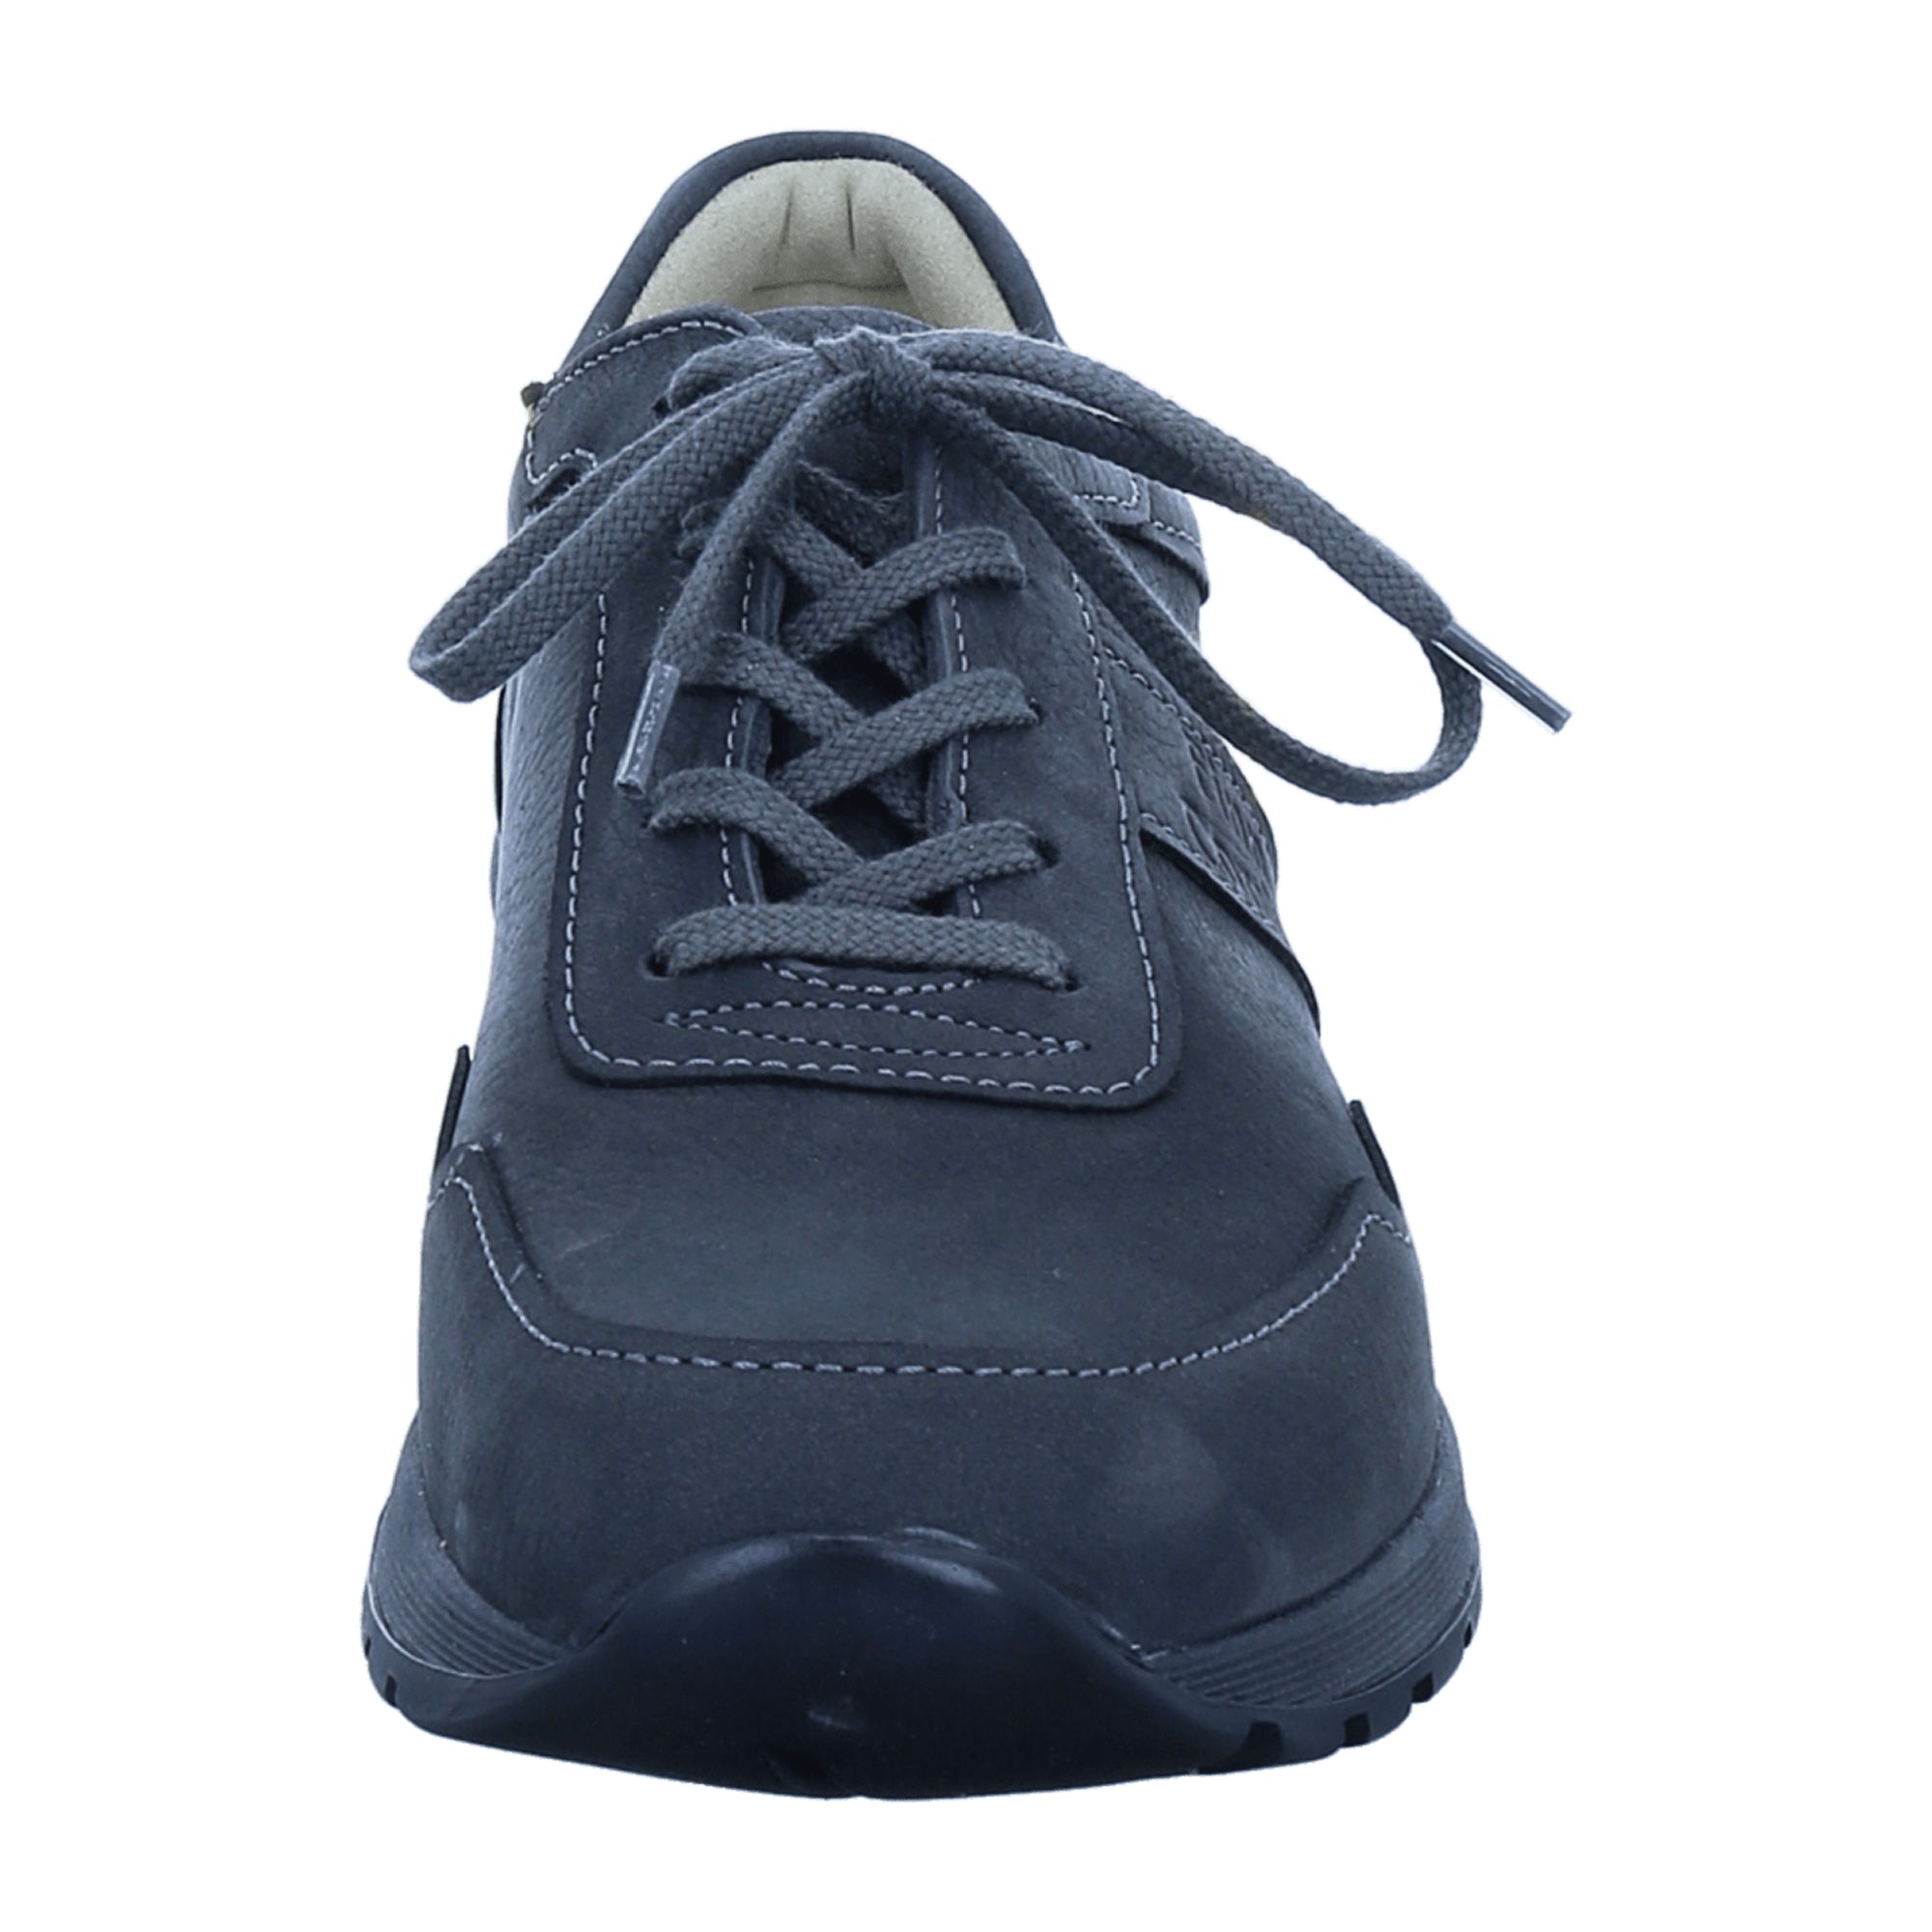 Finn Comfort Prezzo Men's Comfortable Walking Shoes, Stylish Grey